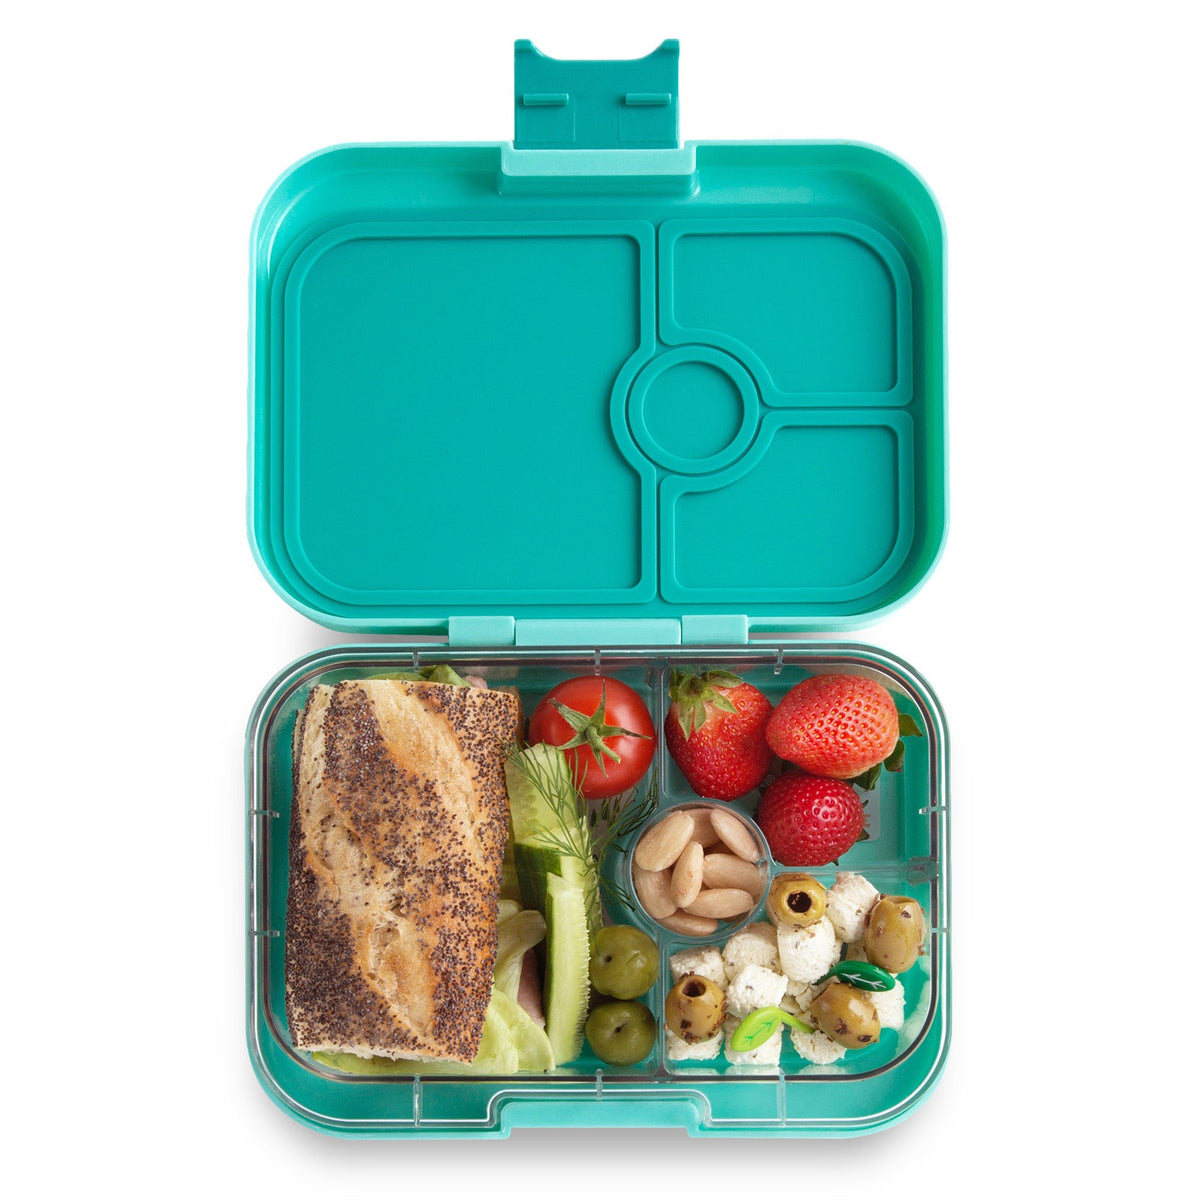 yumbox-panino-suf-green-vintage-california-4-compartment-lunch-box- (4)